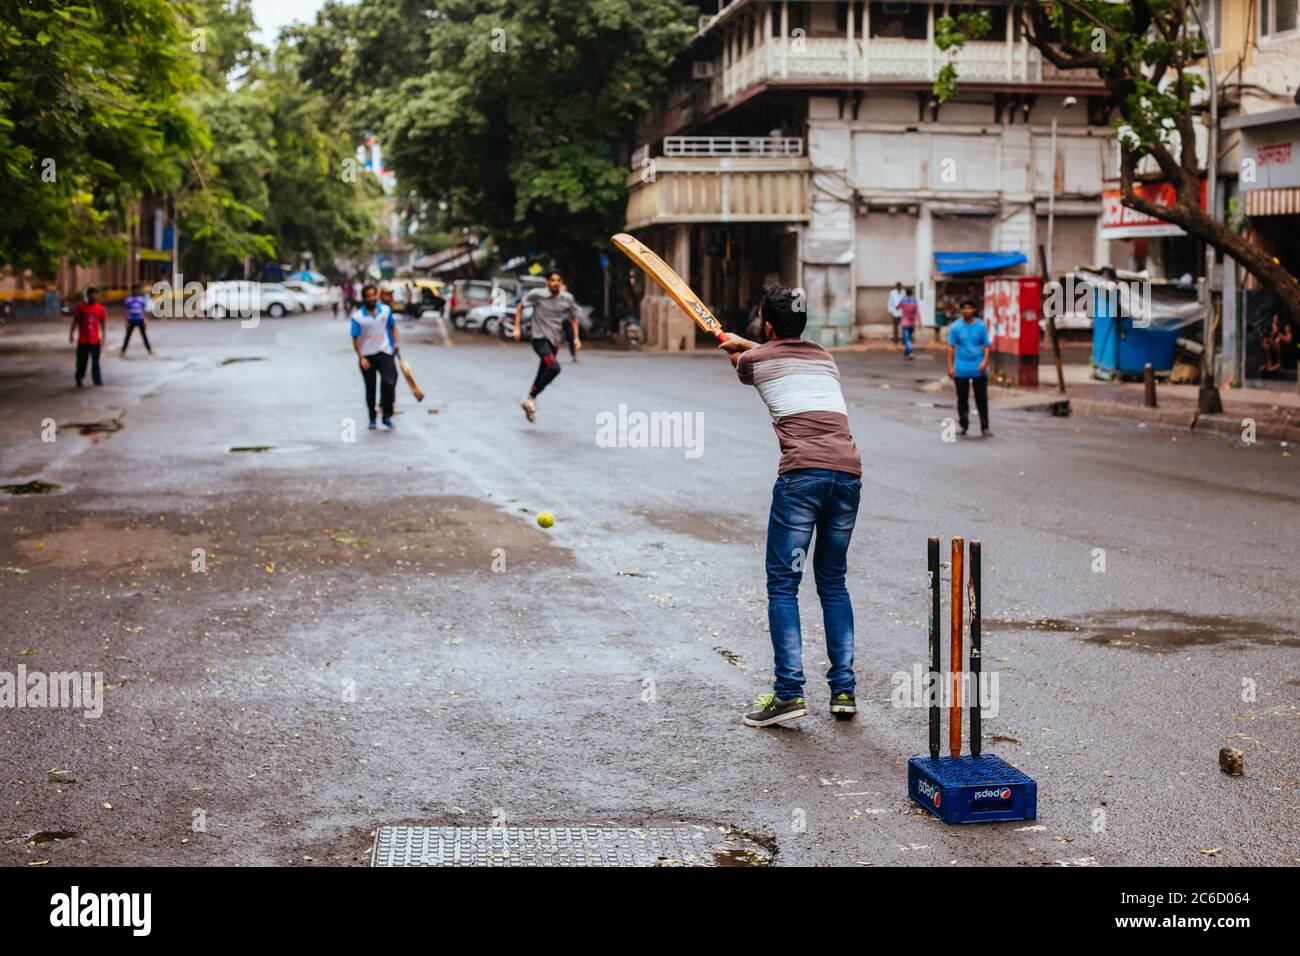 Street Cricket in Mumbai India Stock Photo